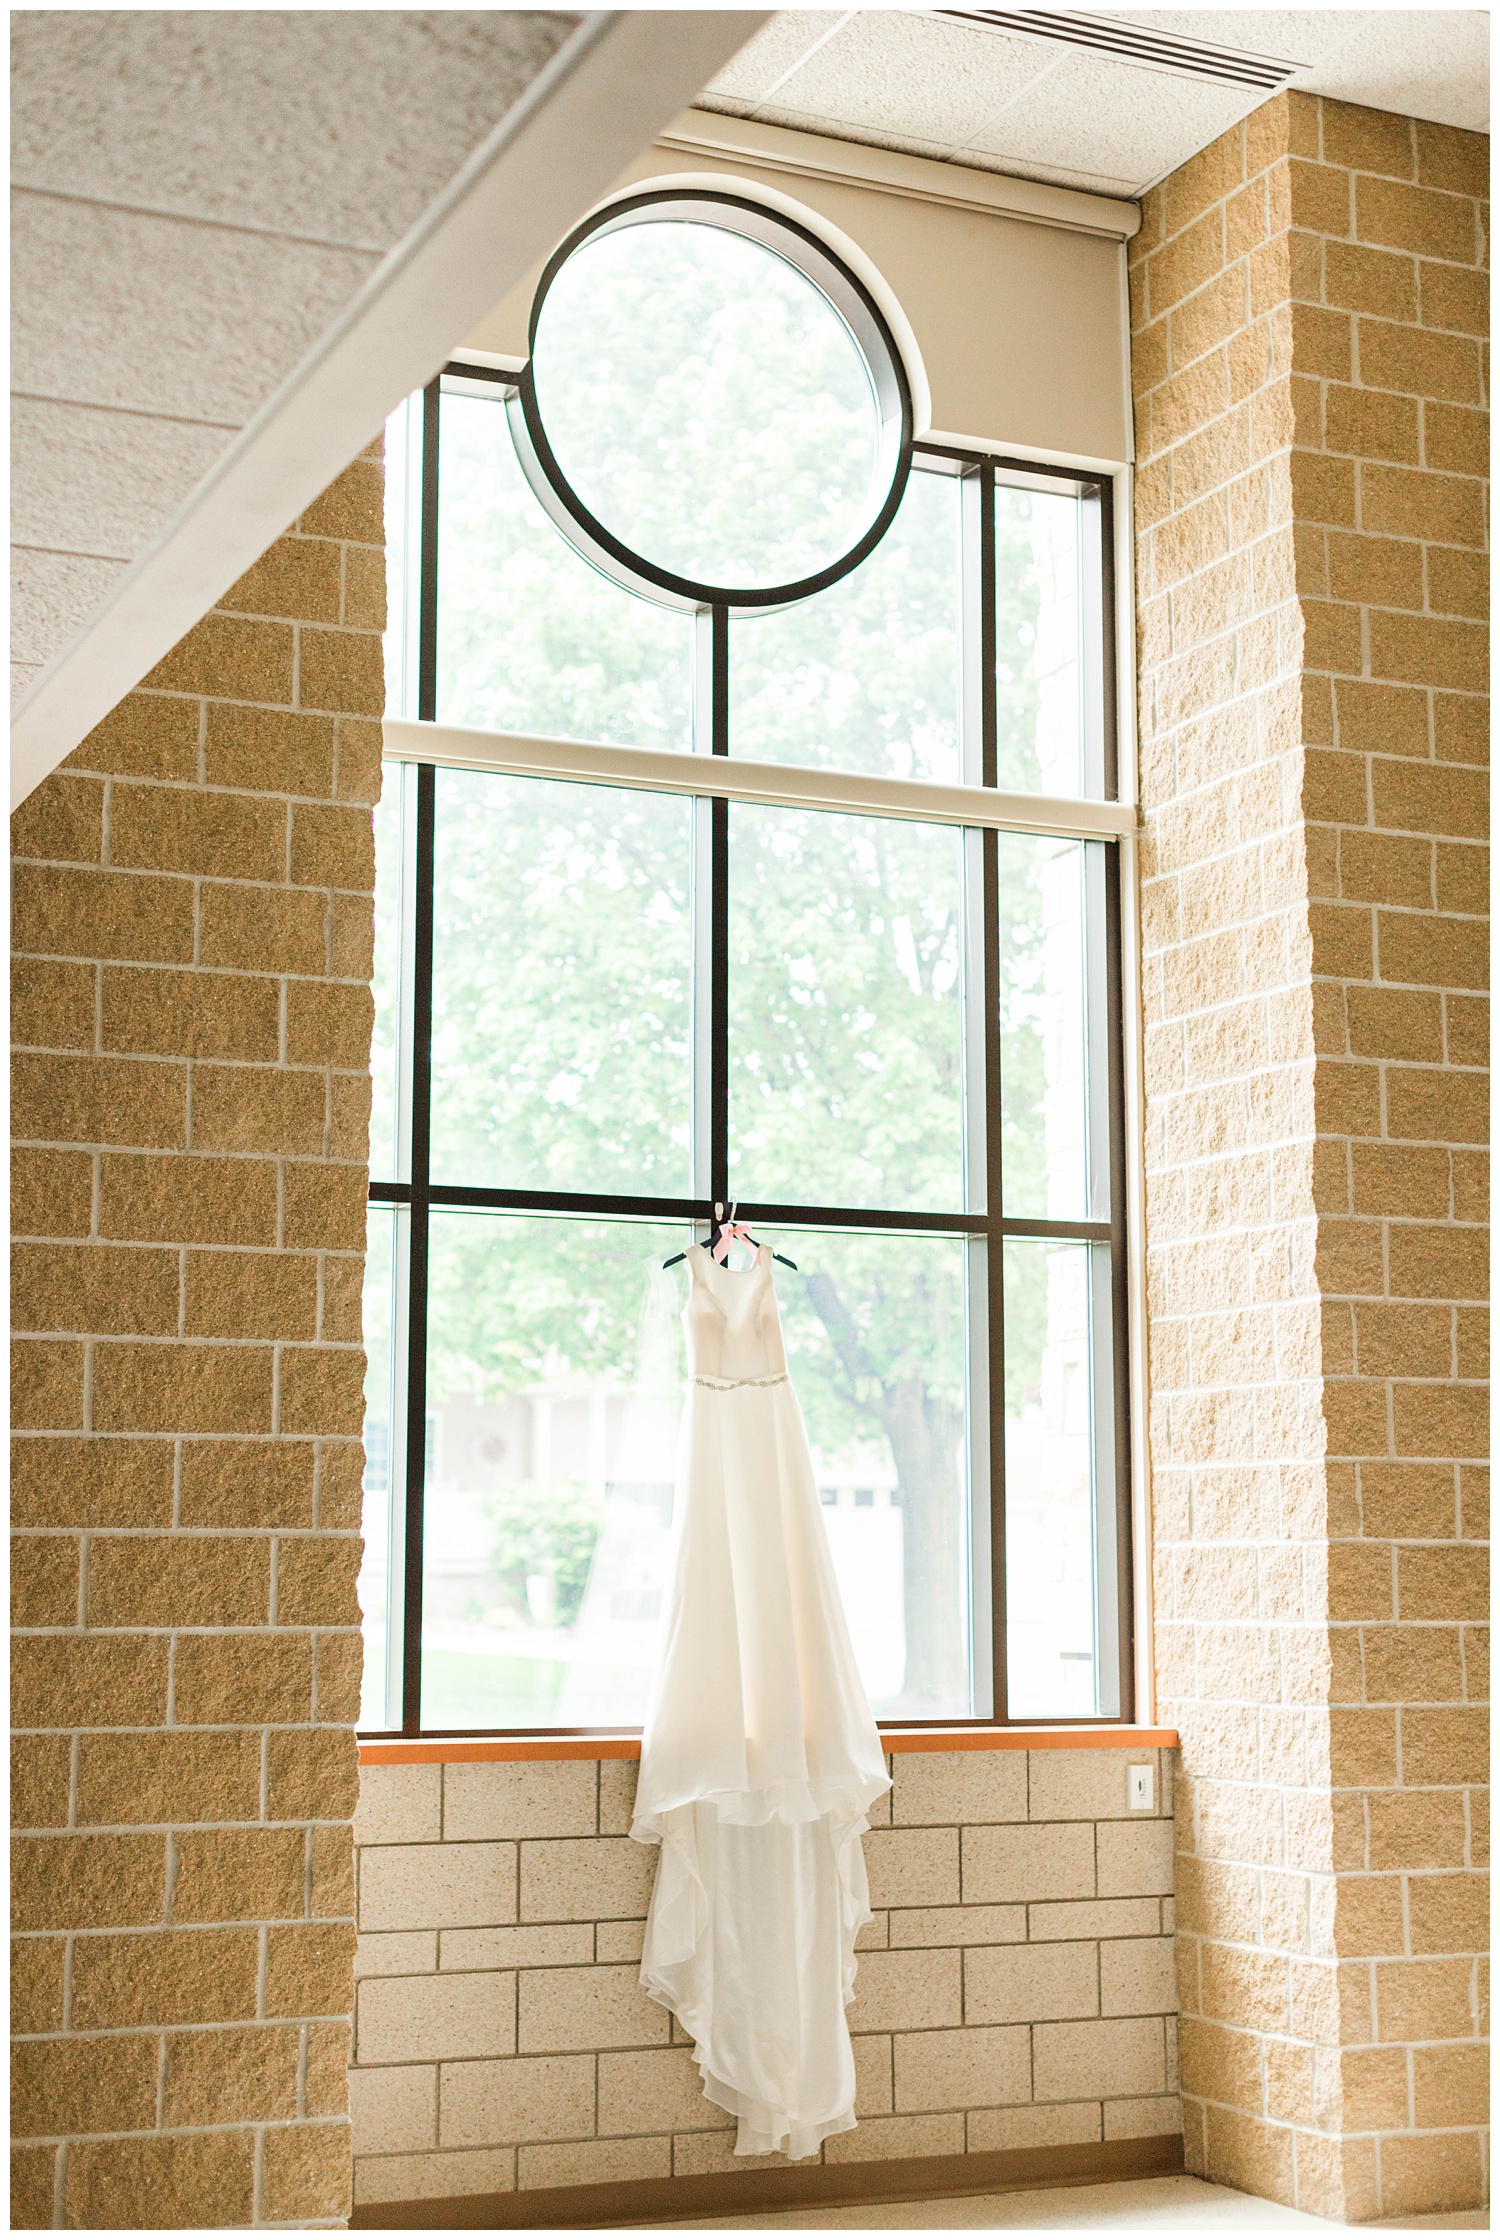 Ever London wedding dress by Justin Alexander hangs in the church window | CB Studio